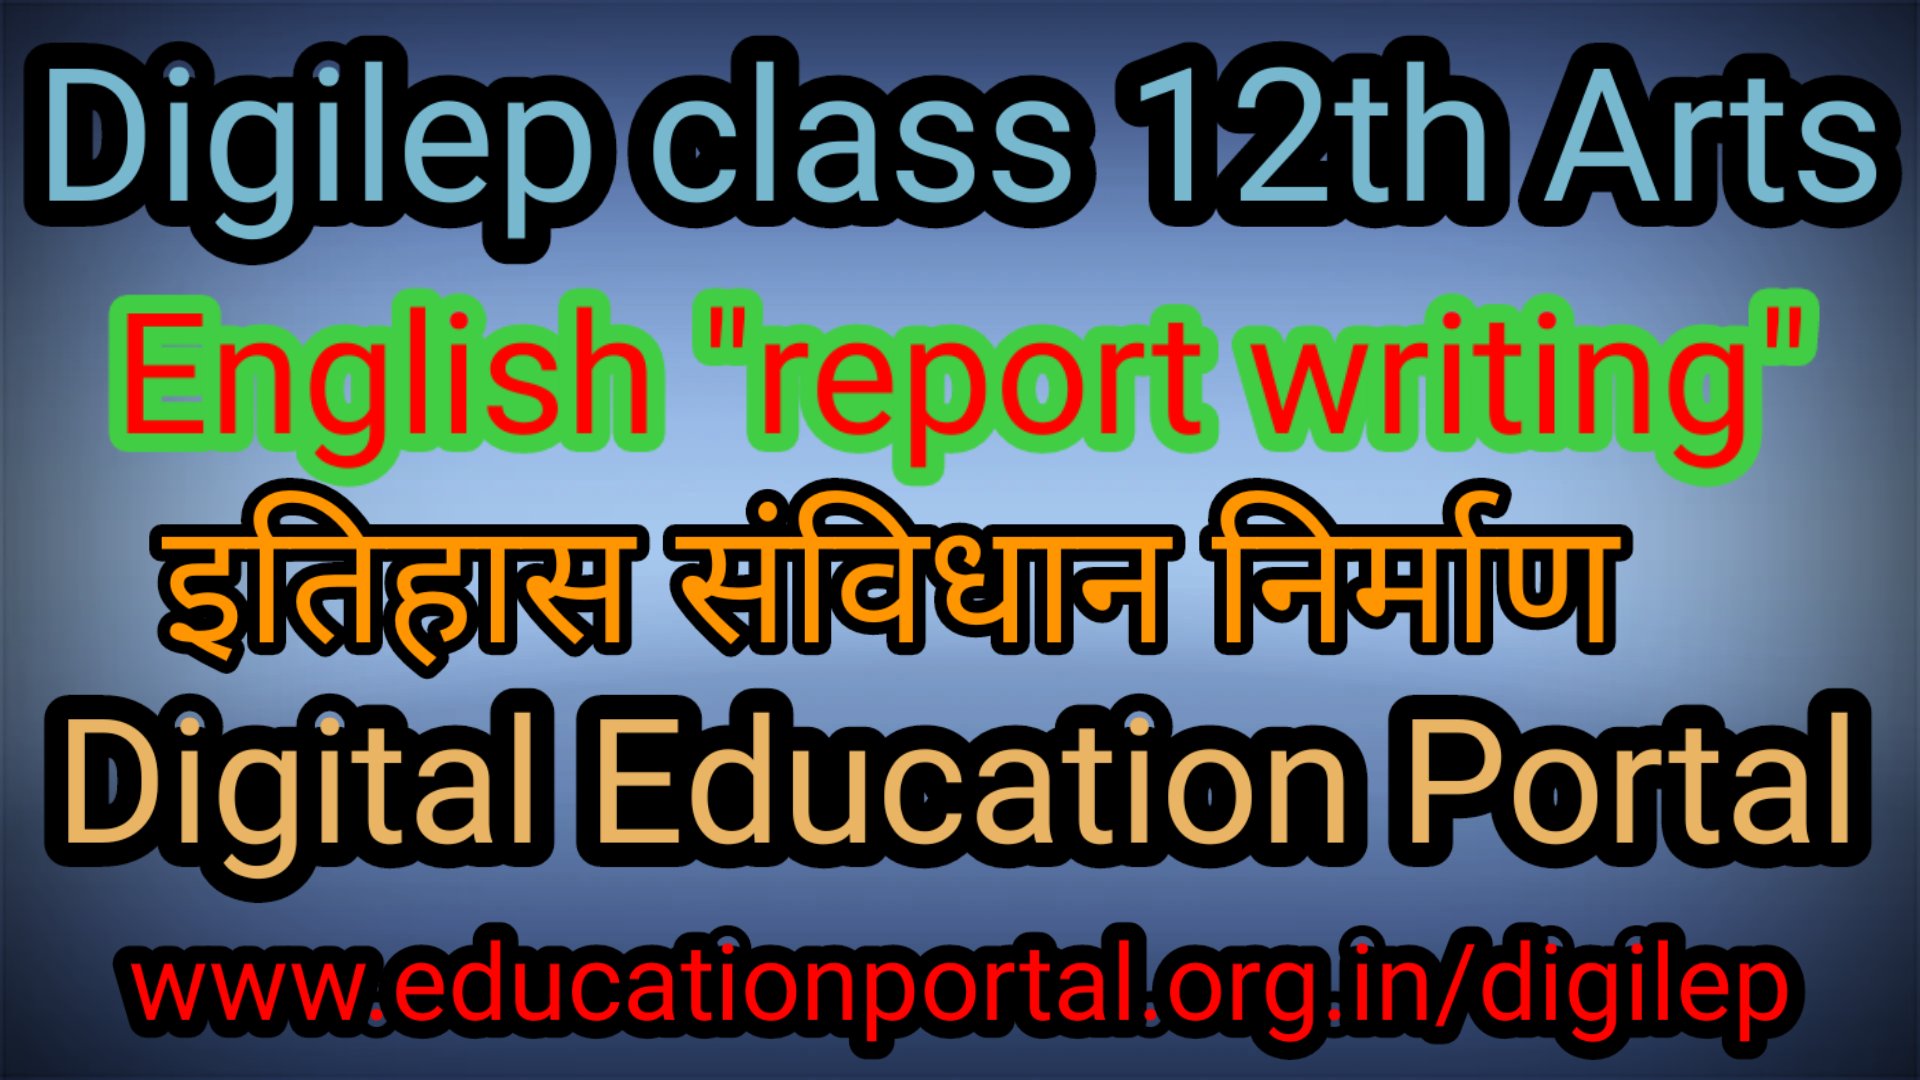 Digilep Class 12th Arts English “REPORT WRITING " इतिहास संविधान निर्माण : एक नए युग की शुरुआत " 08-12-2020